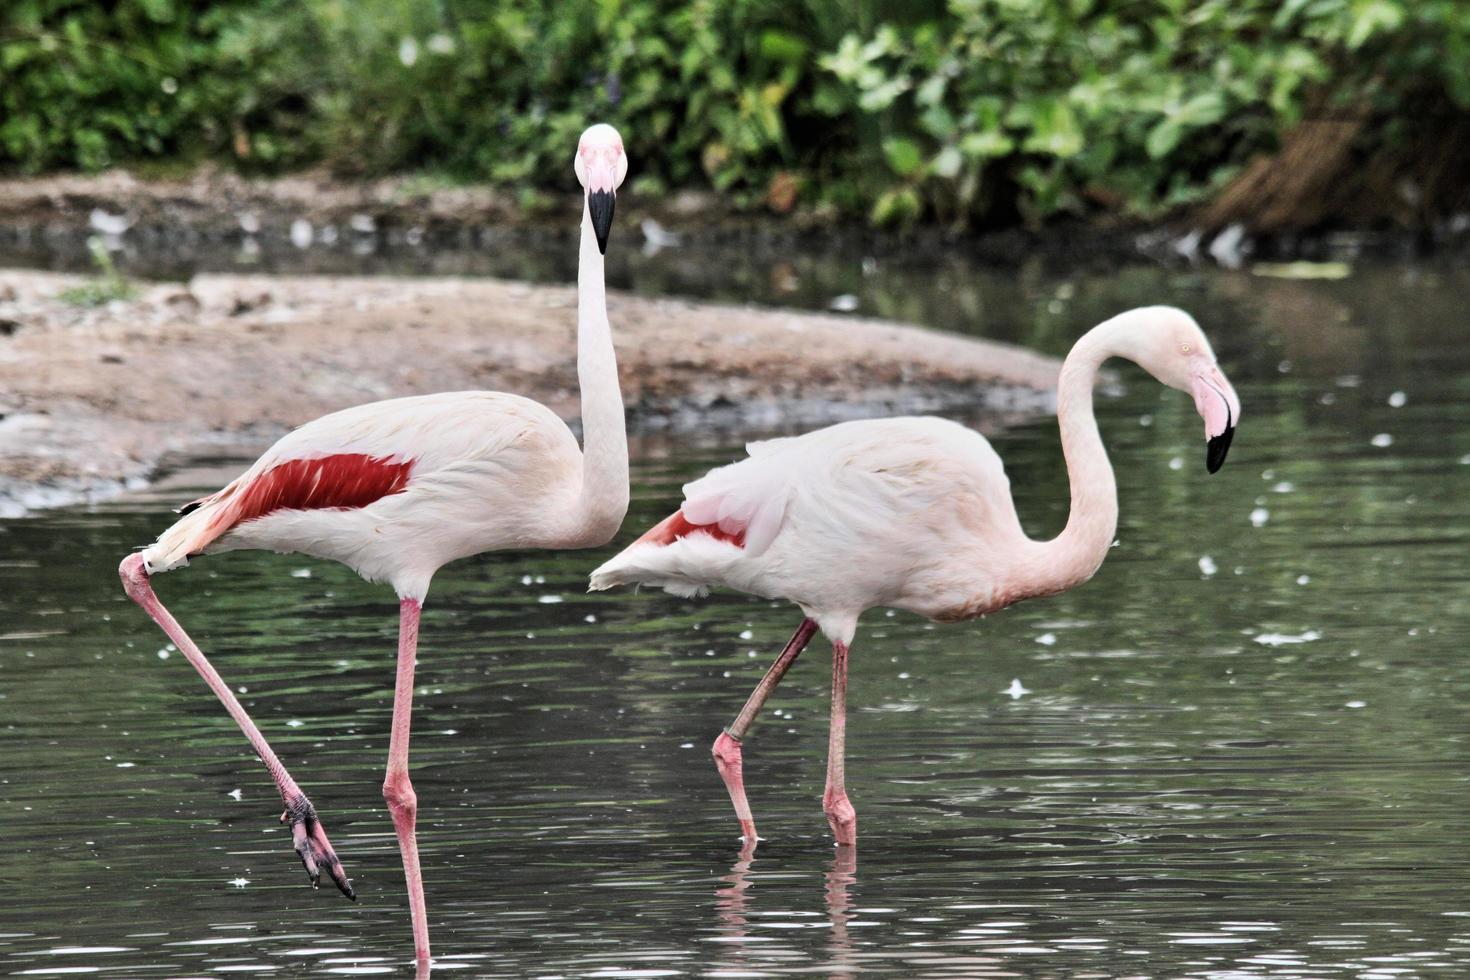 A view of a Flamingo photo